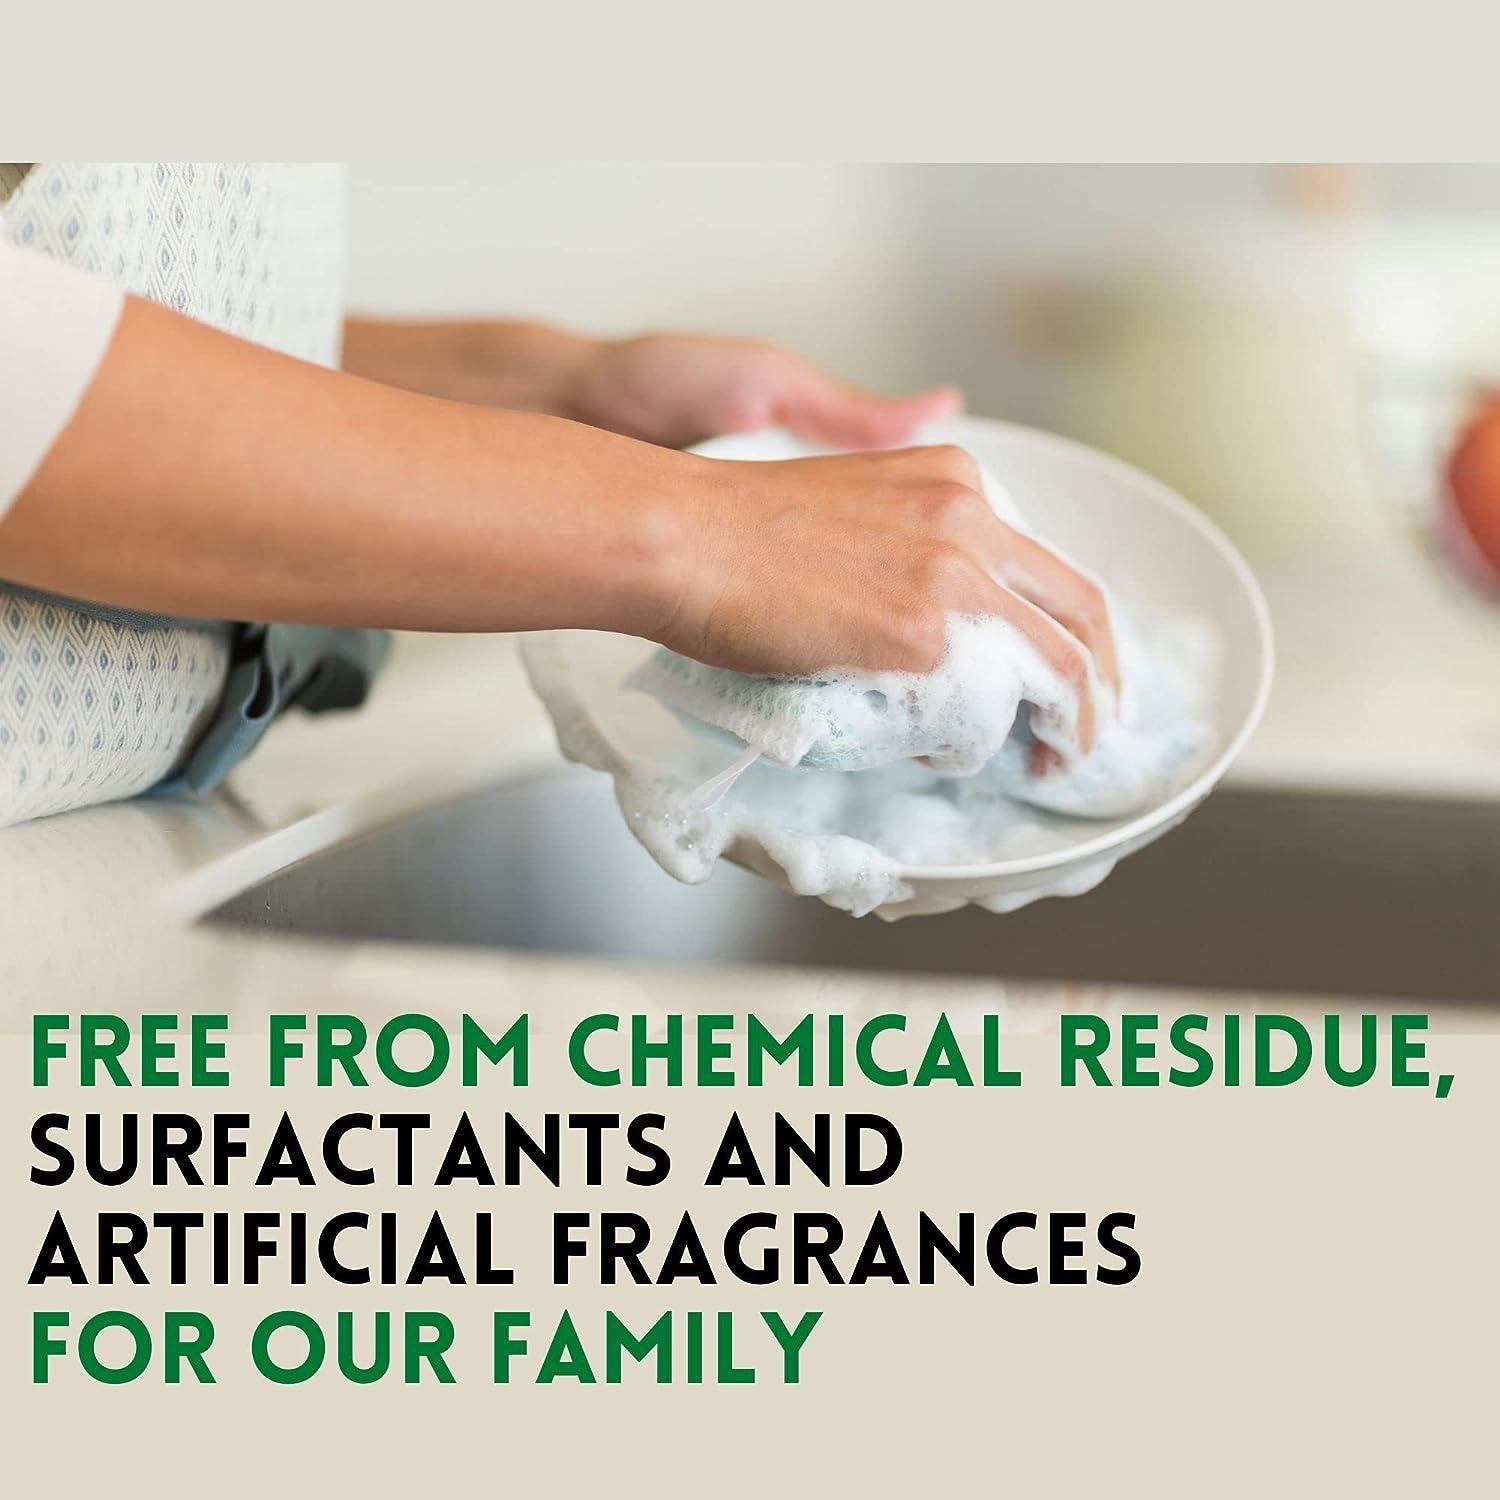 Bio-degradable Safe Dish Soap: Eco Friend & Zero Waste - Safely